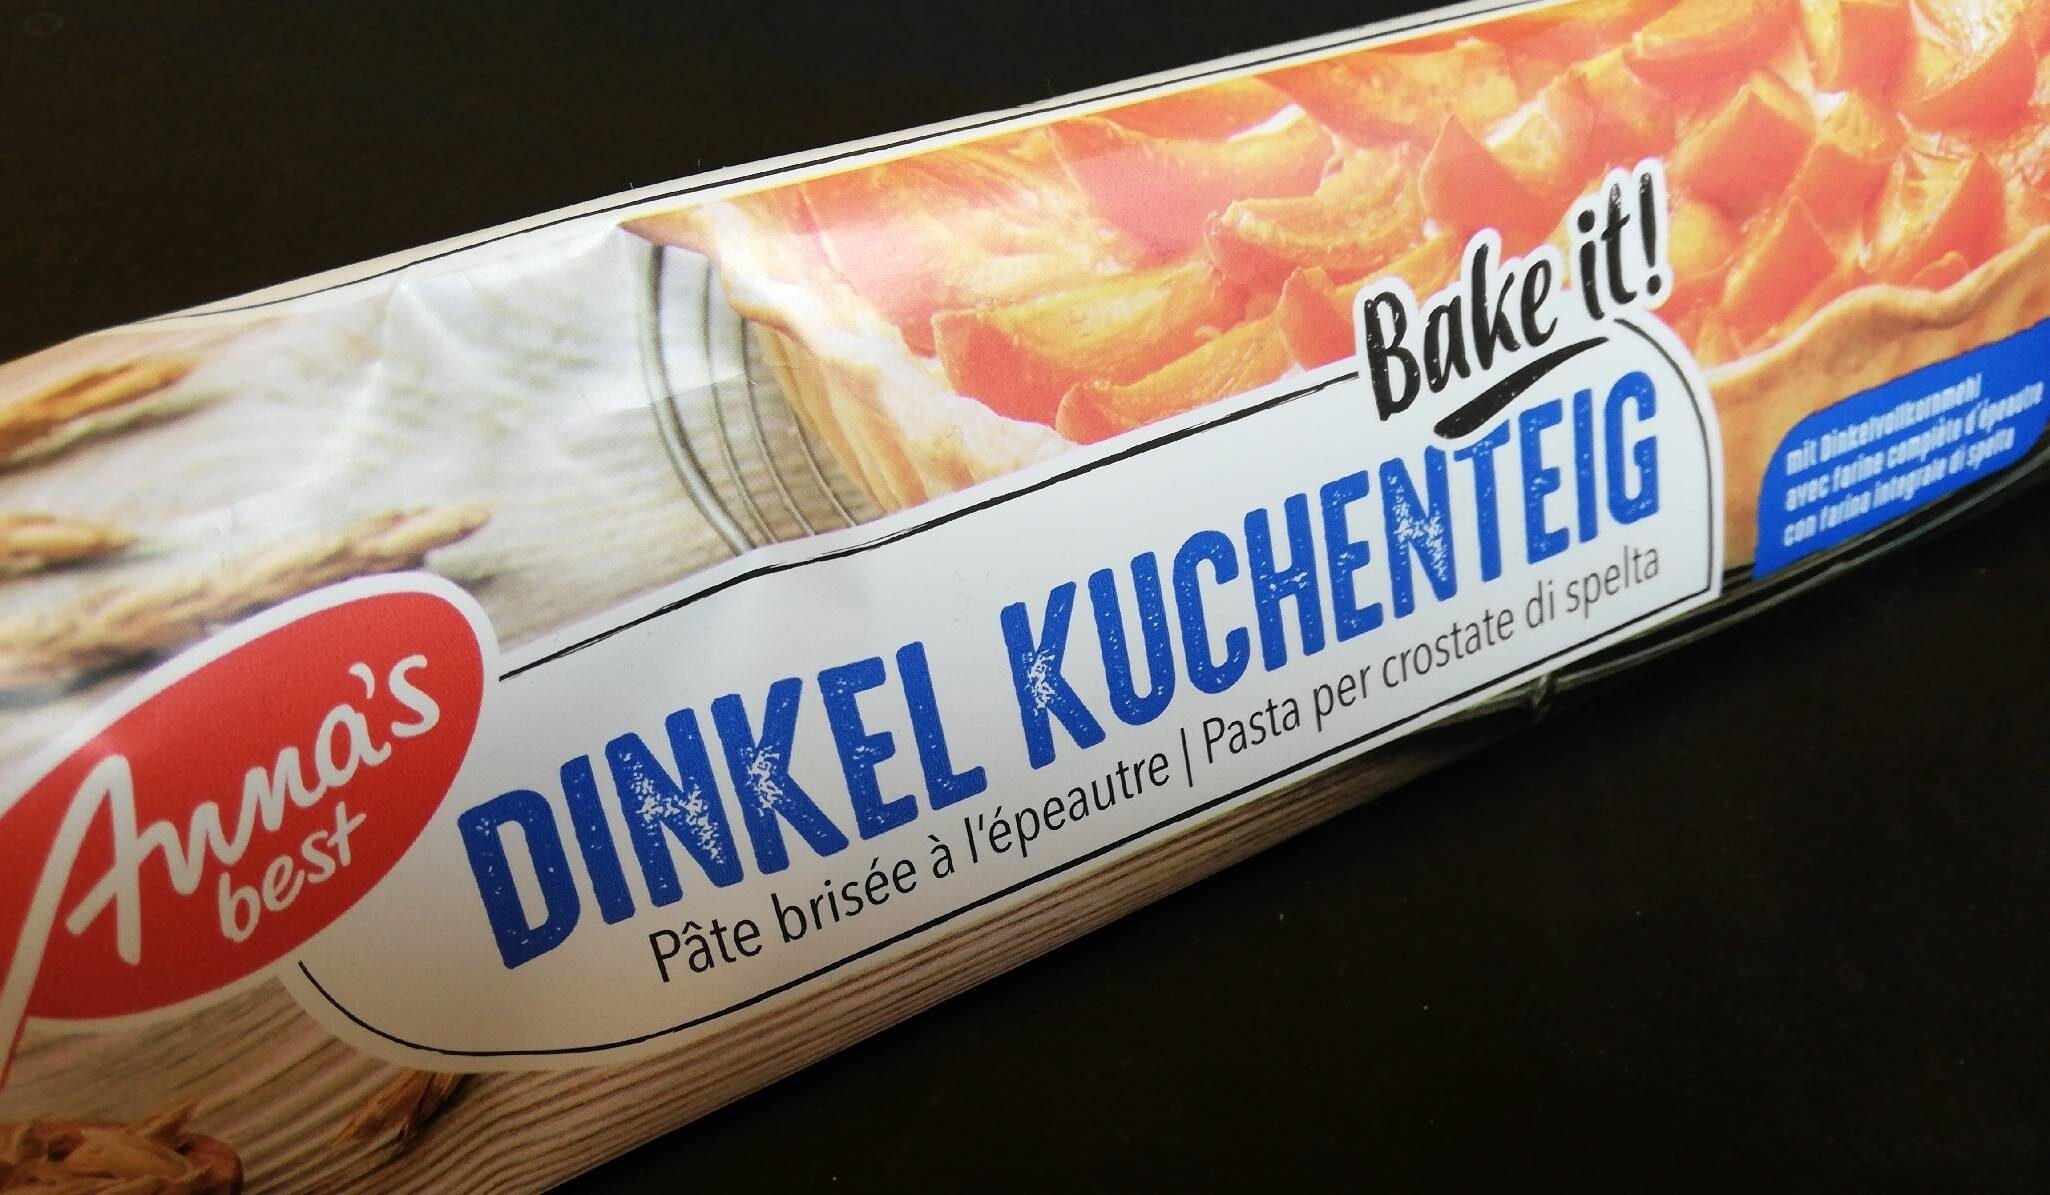 Dinkel Kuchenteig 119 - Product - fr